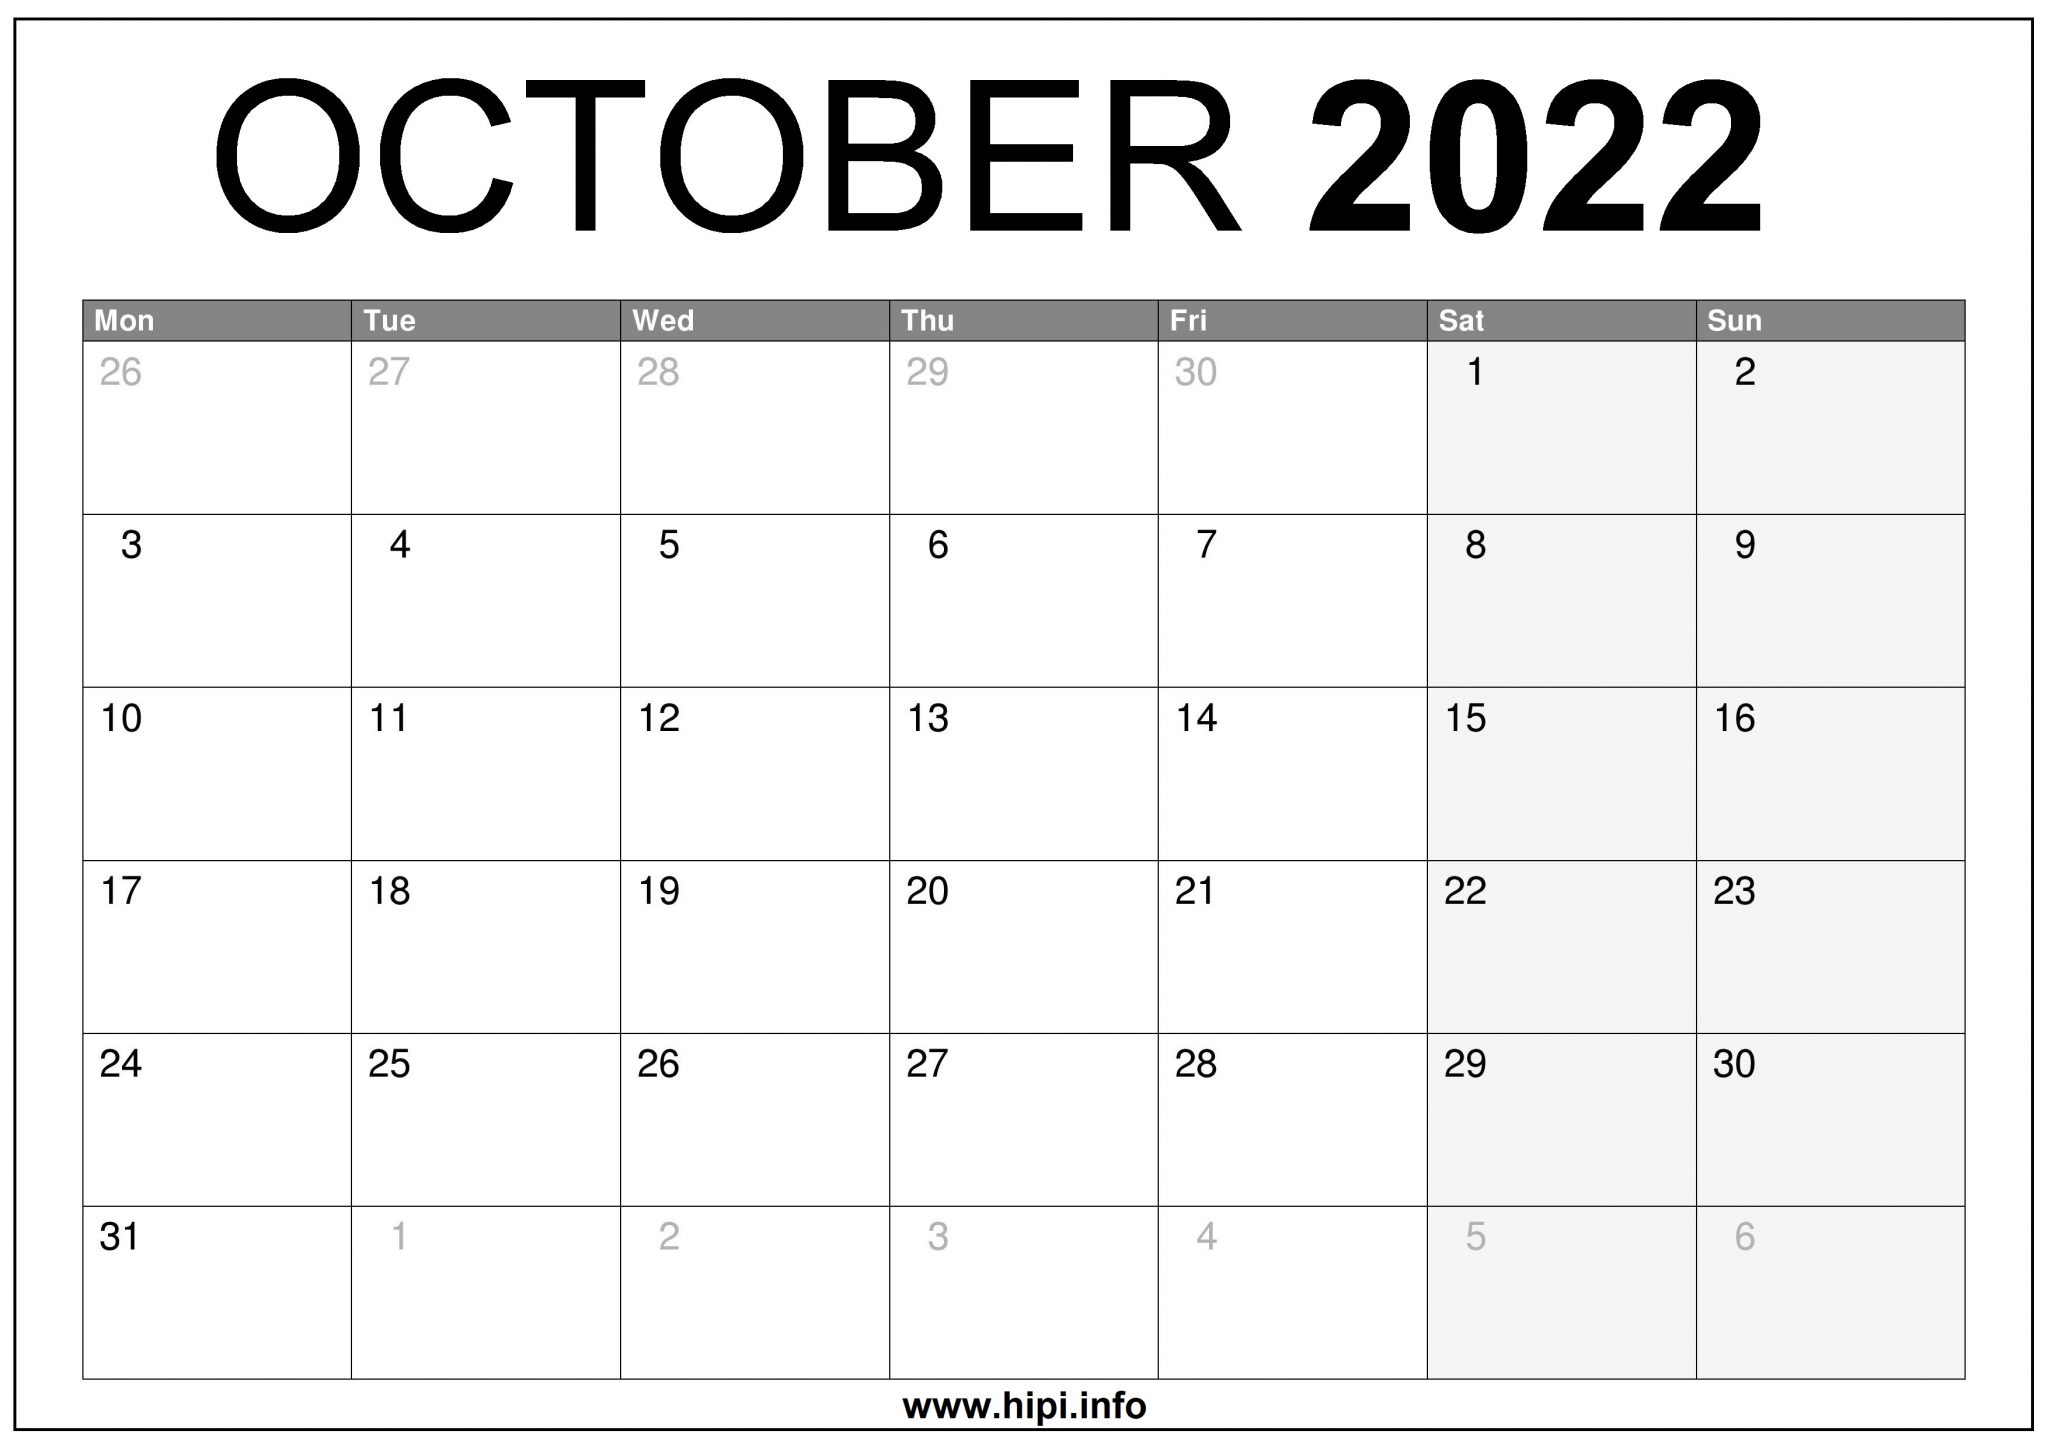 october-2022-uk-calendar-printable-free-hipi-info-calendars-printable-free